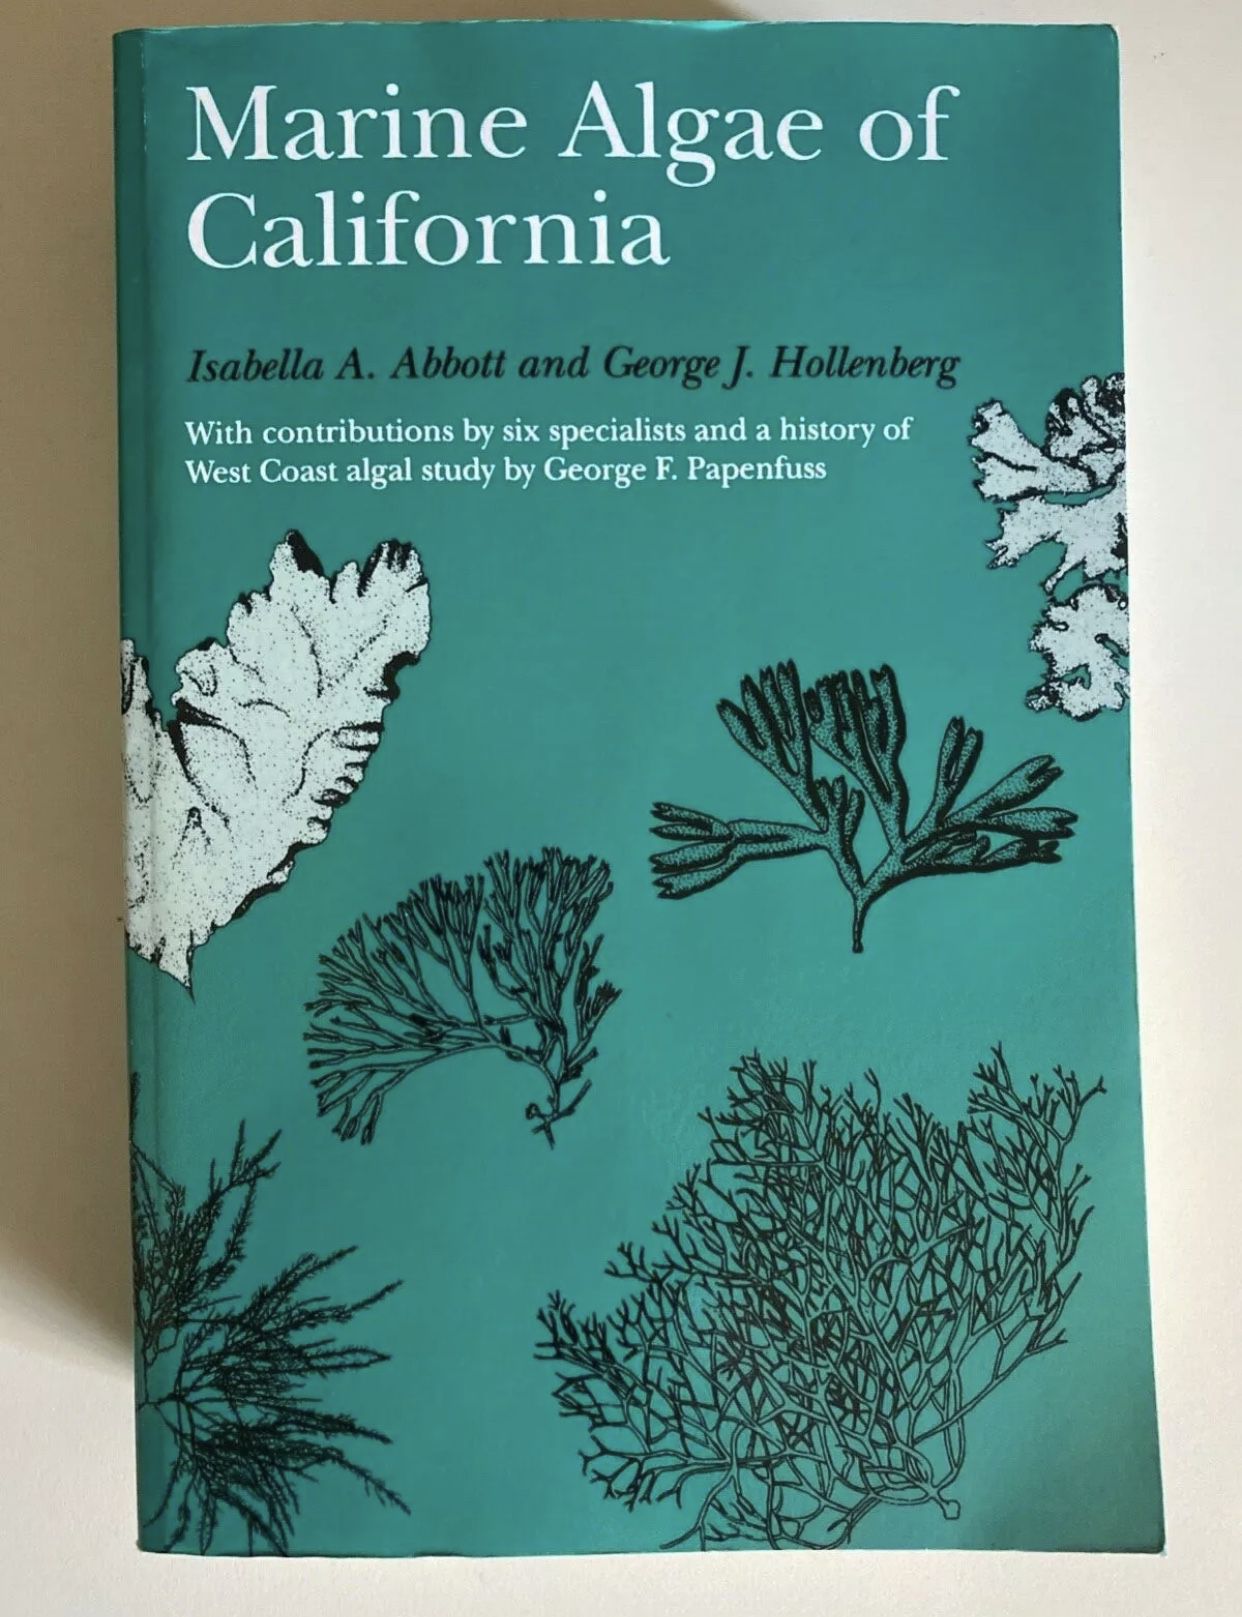 Marine Algae of California by Isabella A. Abbott and George J. Hollenberg *NEW*